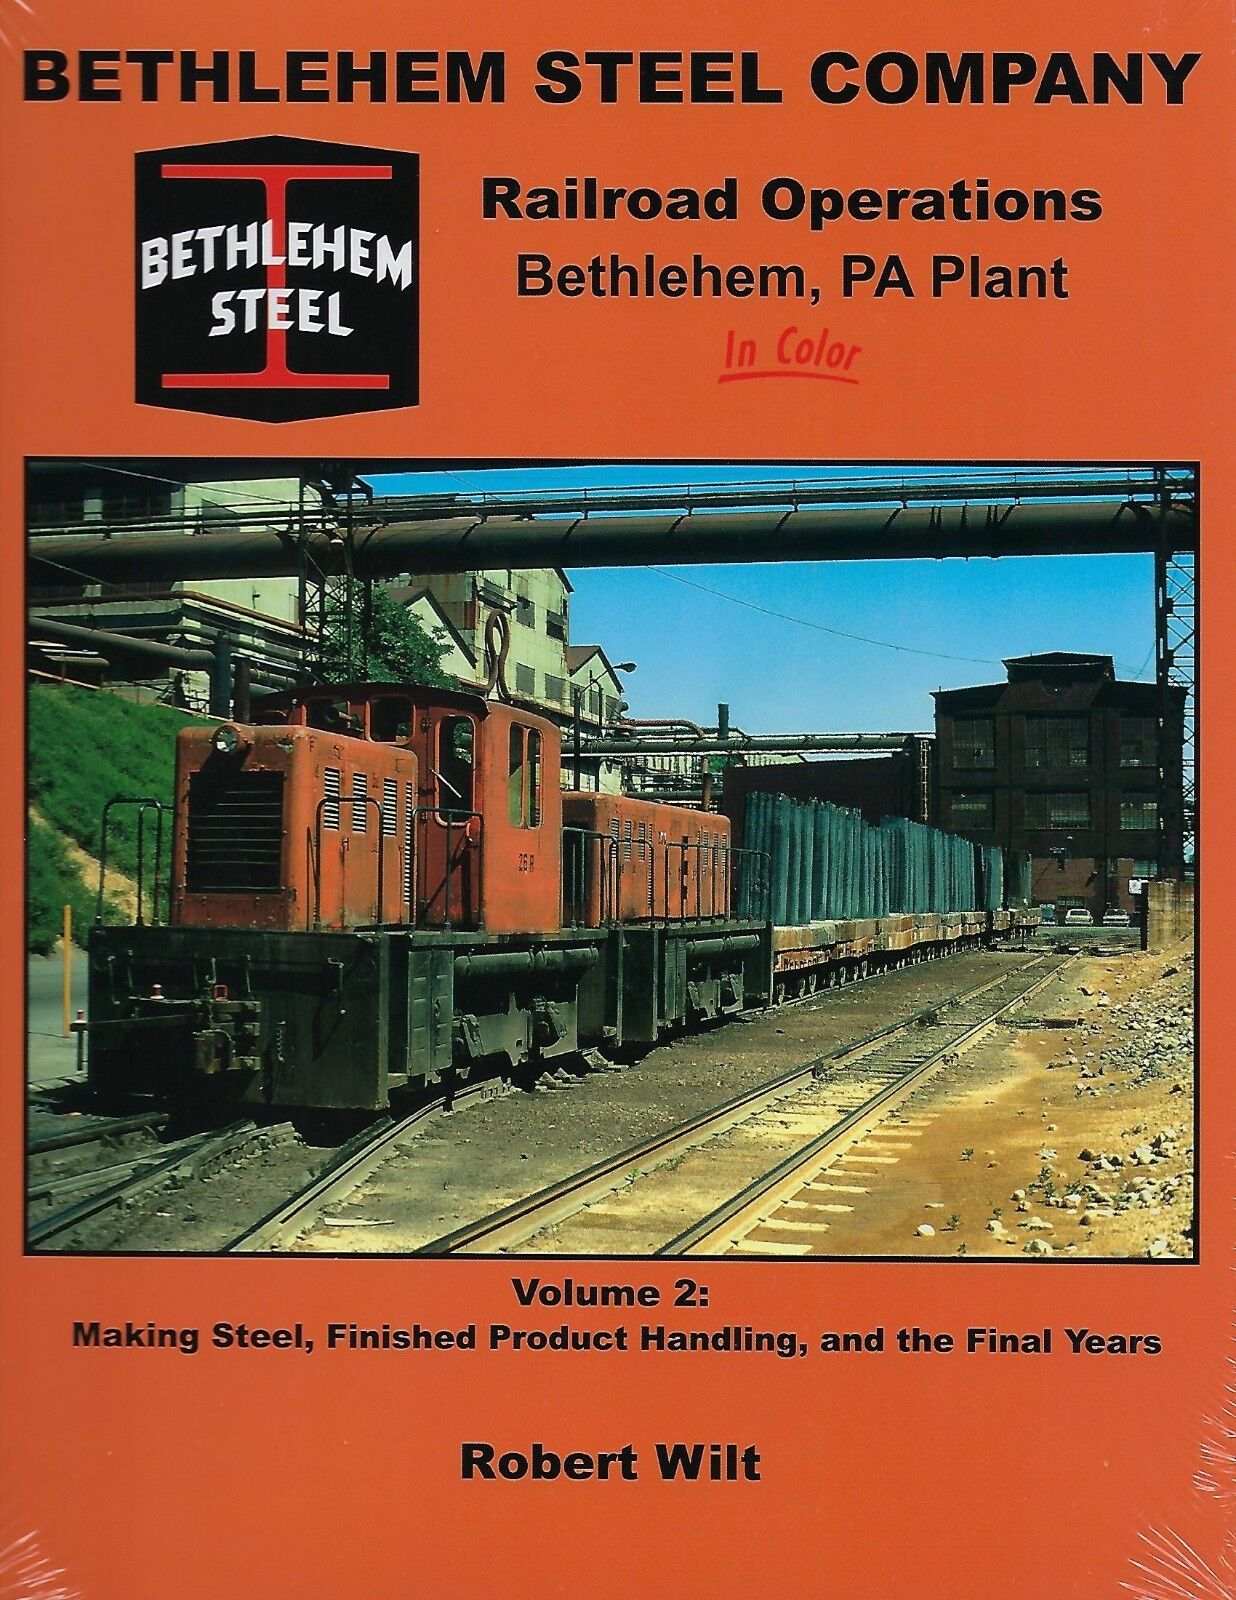 BETHLEHEM STEEL COMPANY Railroad Ops, Vol. 2, MAKING STEEL & The Final Years NEW